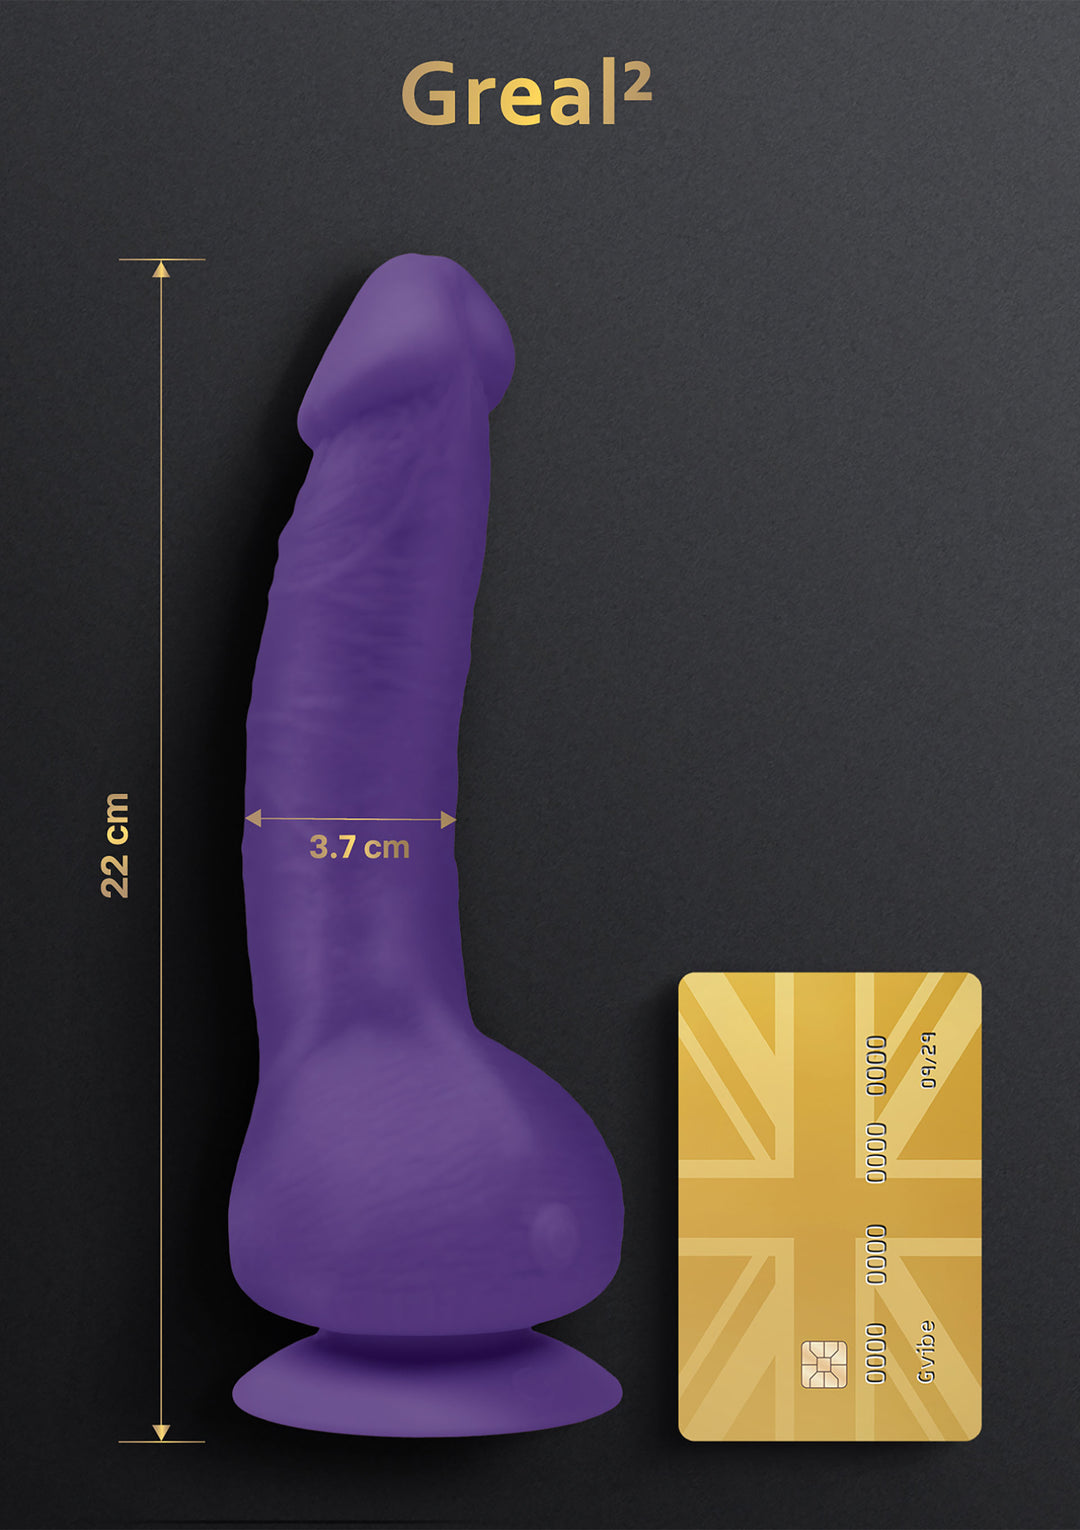 G-Real purple realistic vibrator - 22 cm